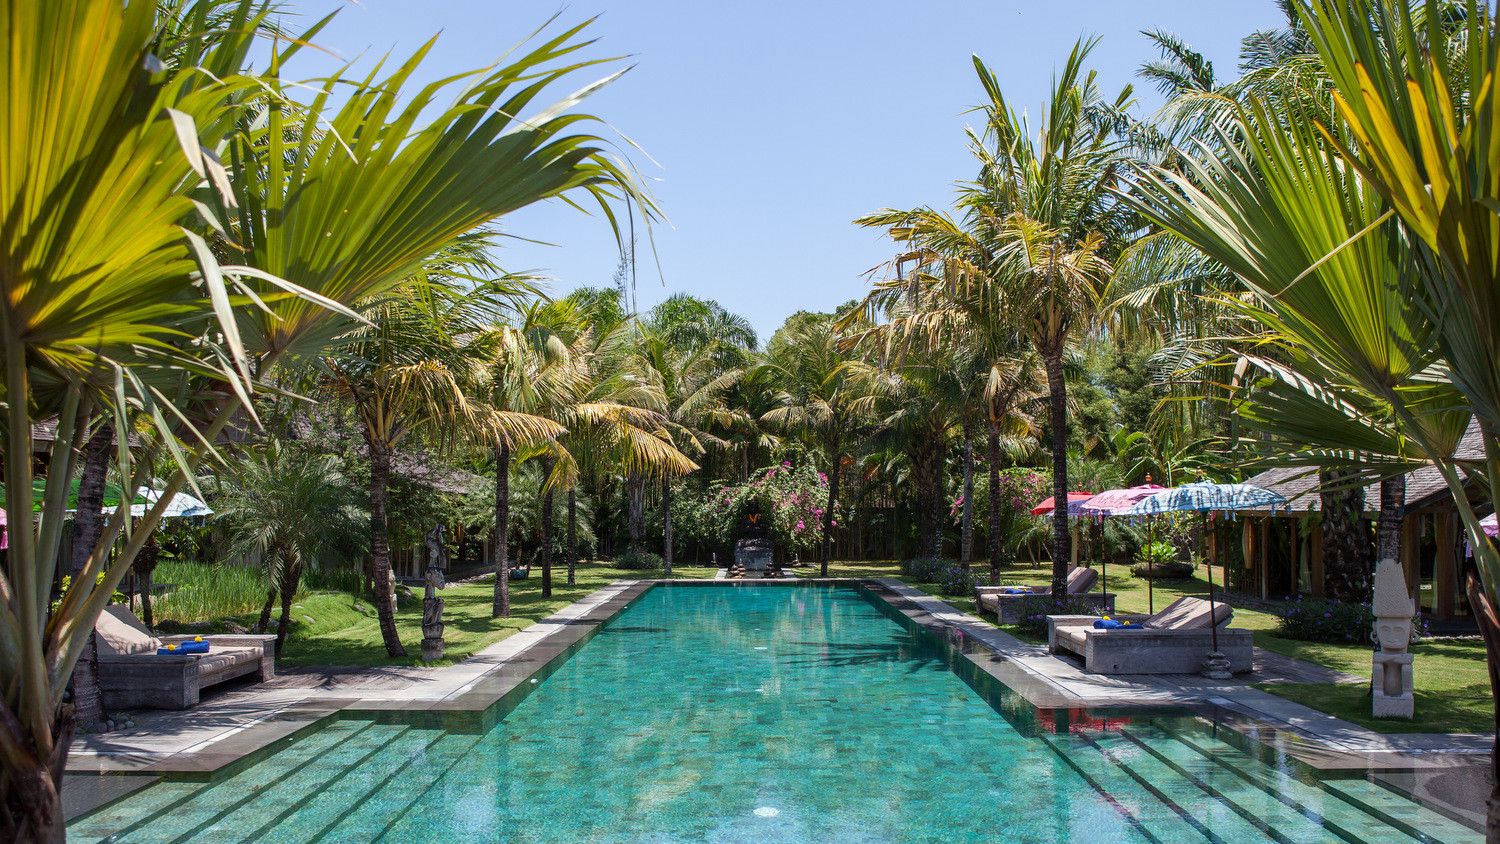  Villa  Kayu  in Umalas Bali 5 bedrooms Best Price 